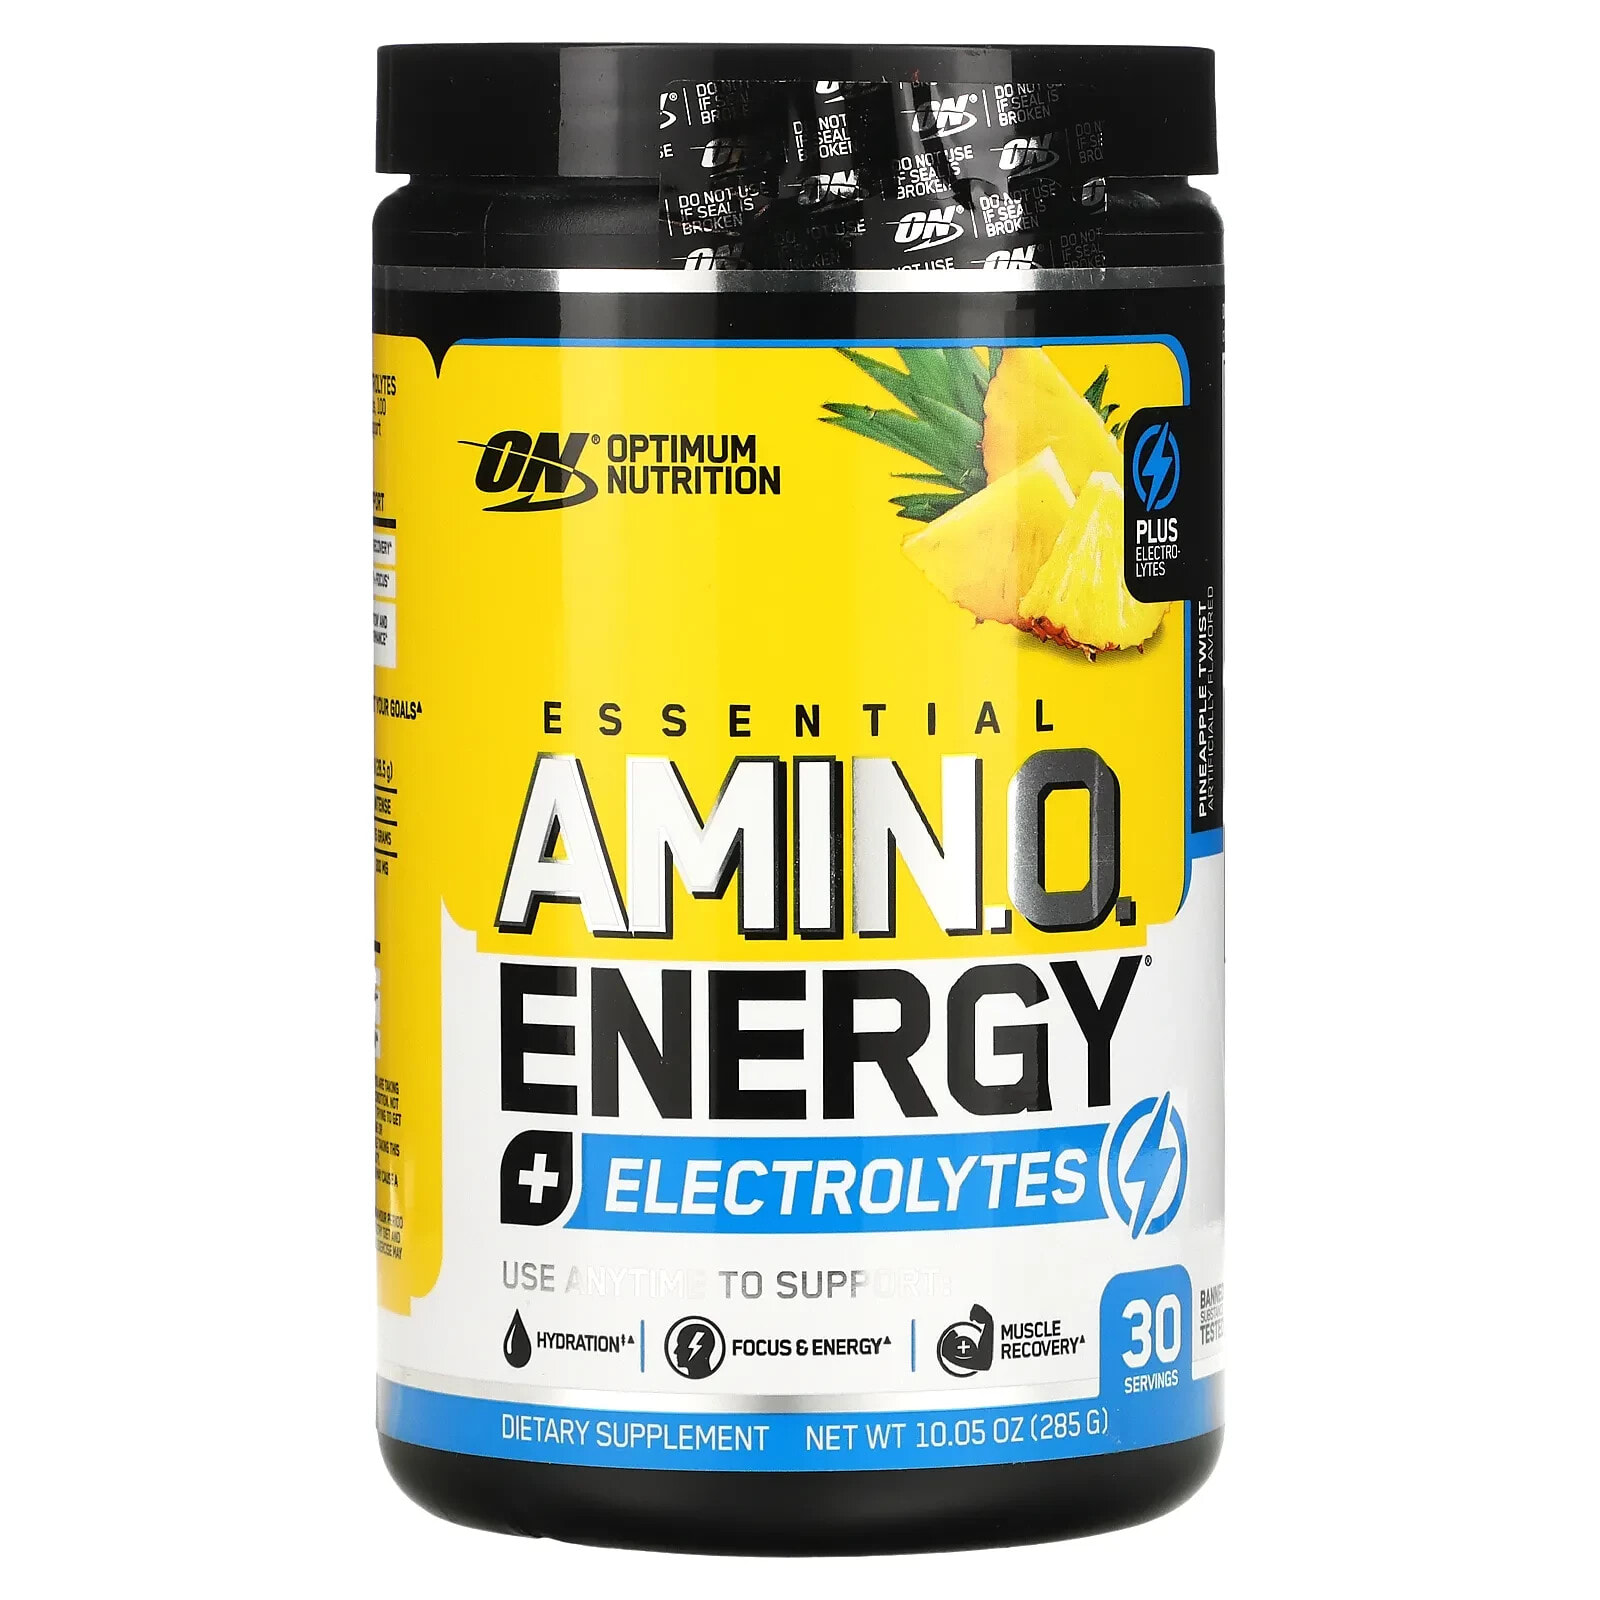 Optimum Nutrition, Essential Amino Energy + электролиты, арбузный взрыв, 10,05 унц. (285 г)